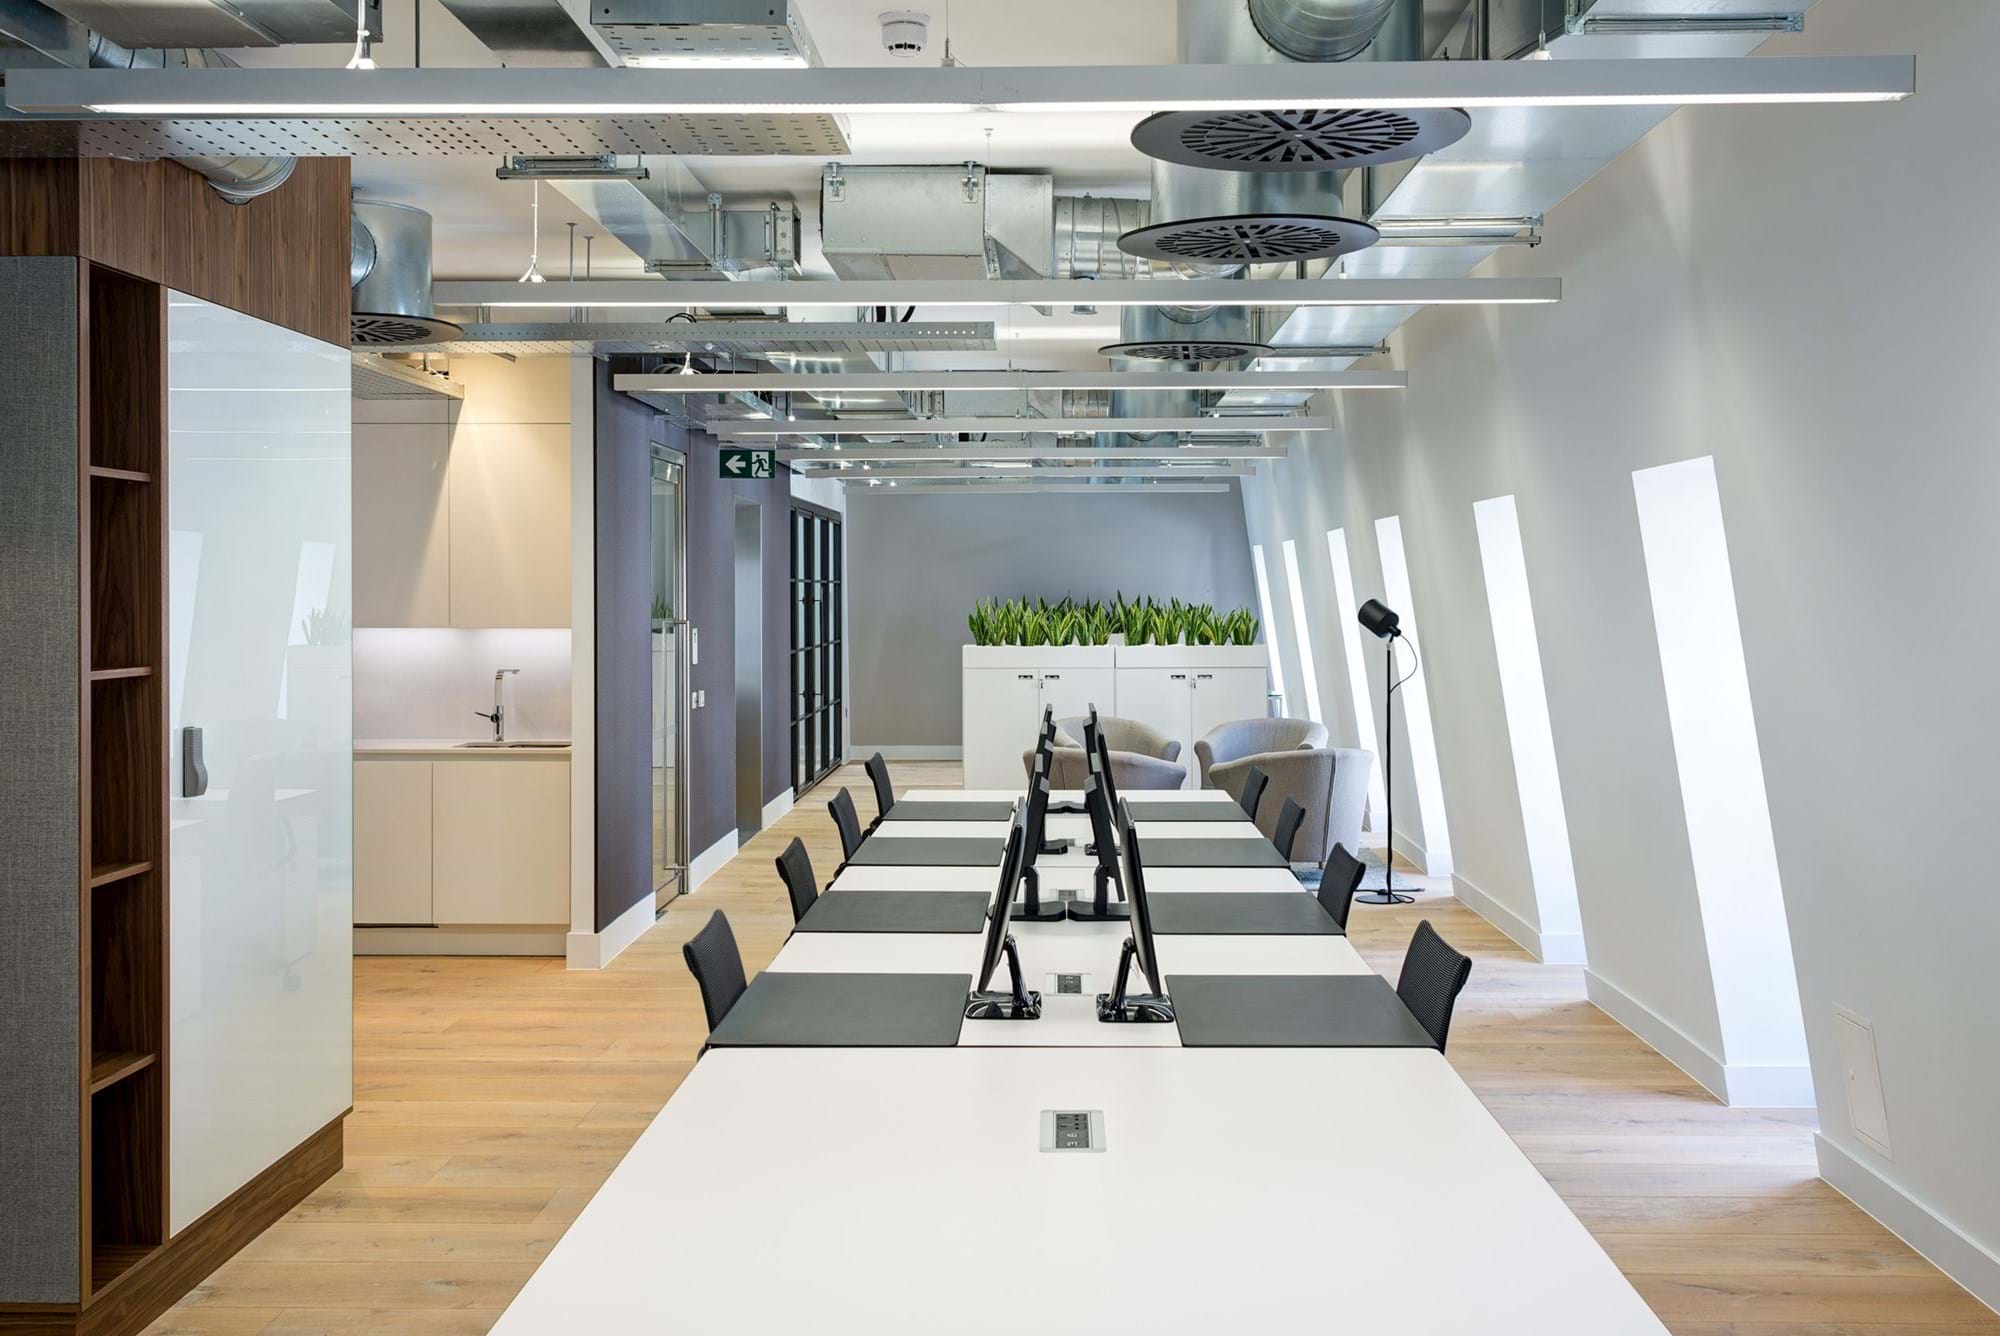 Modus Workspace office design, fit out and refurbishment - Craigewan - Graigewan 11 highres sRGB.jpg (1)